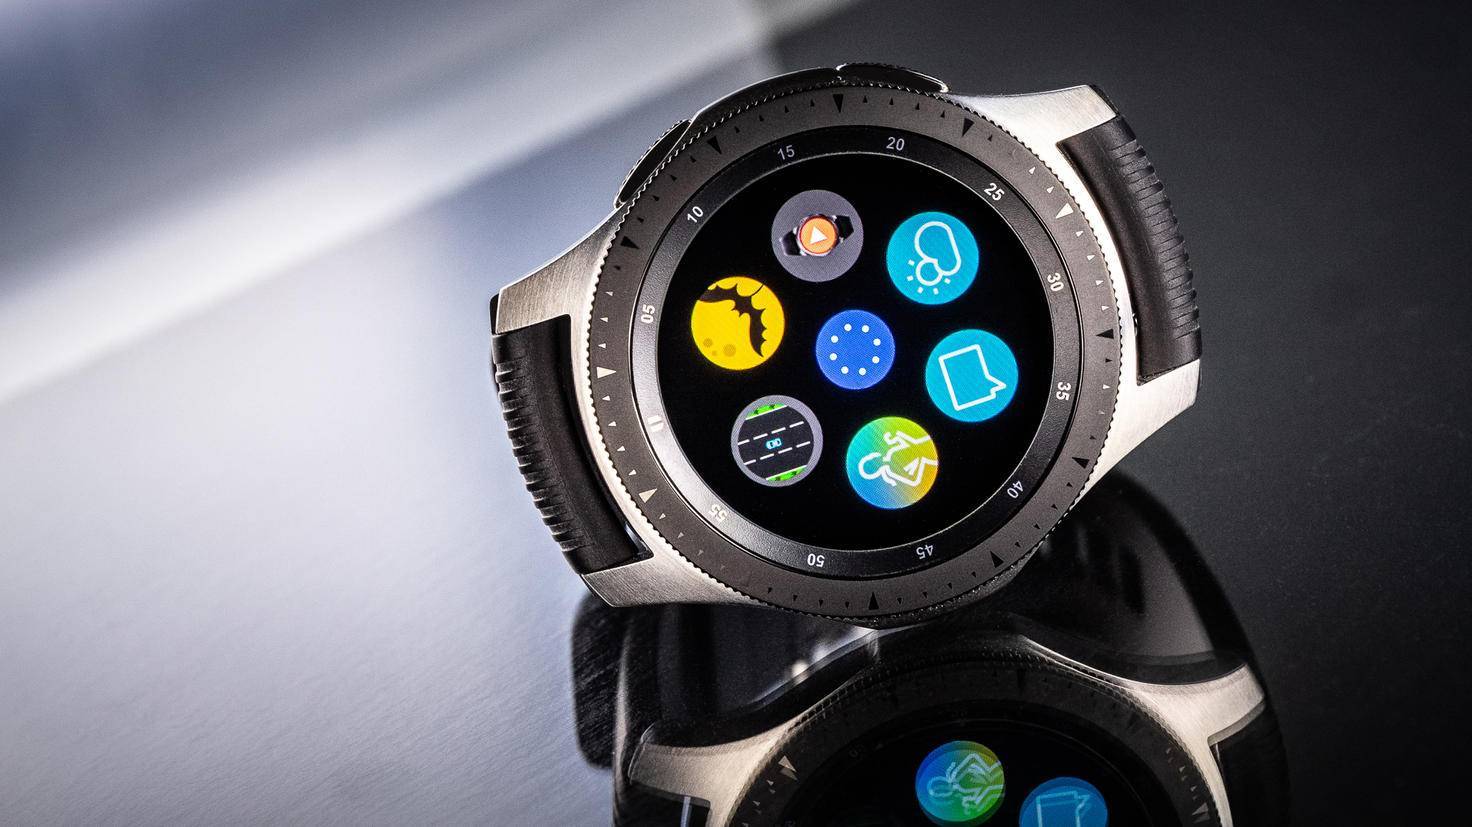 Samsung galaxy watch 4 wi-fi 40mm vs samsung gear s3 classic